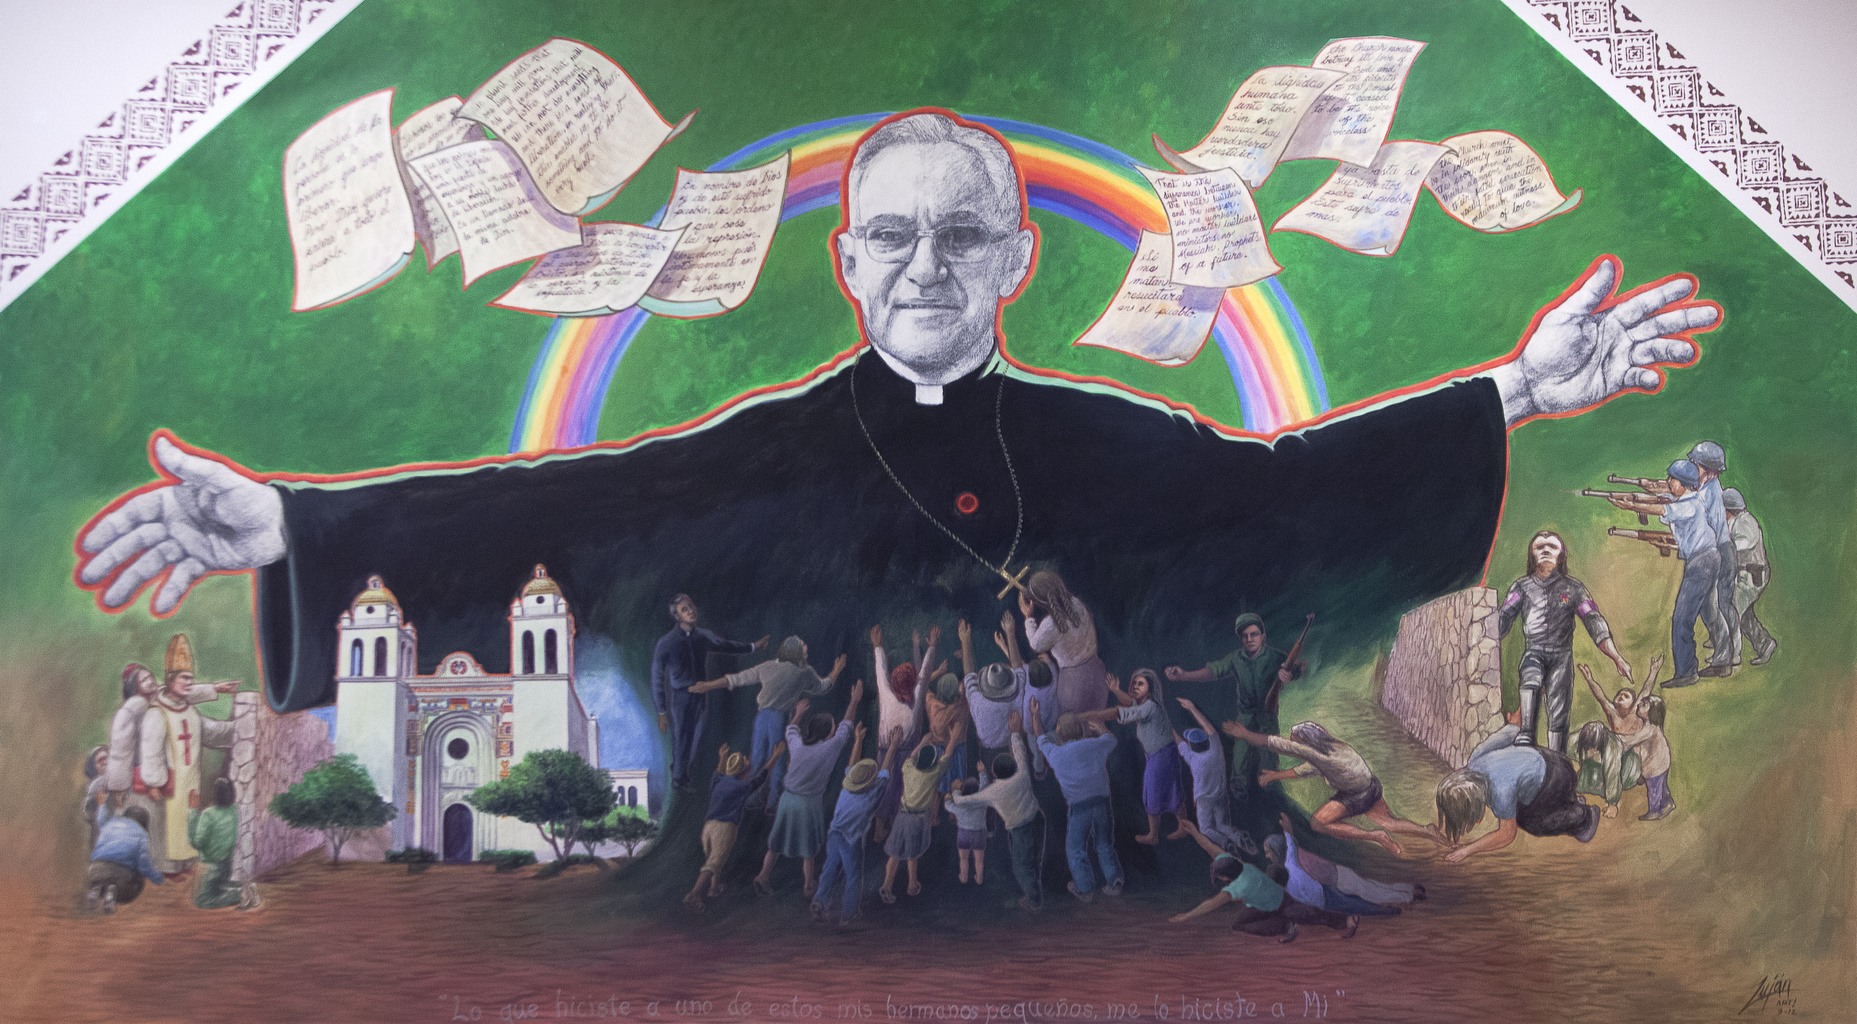 Mural of Salvadoran Archbishop Oscar Romero seen in 2012 at Columban Mission Center in El Paso